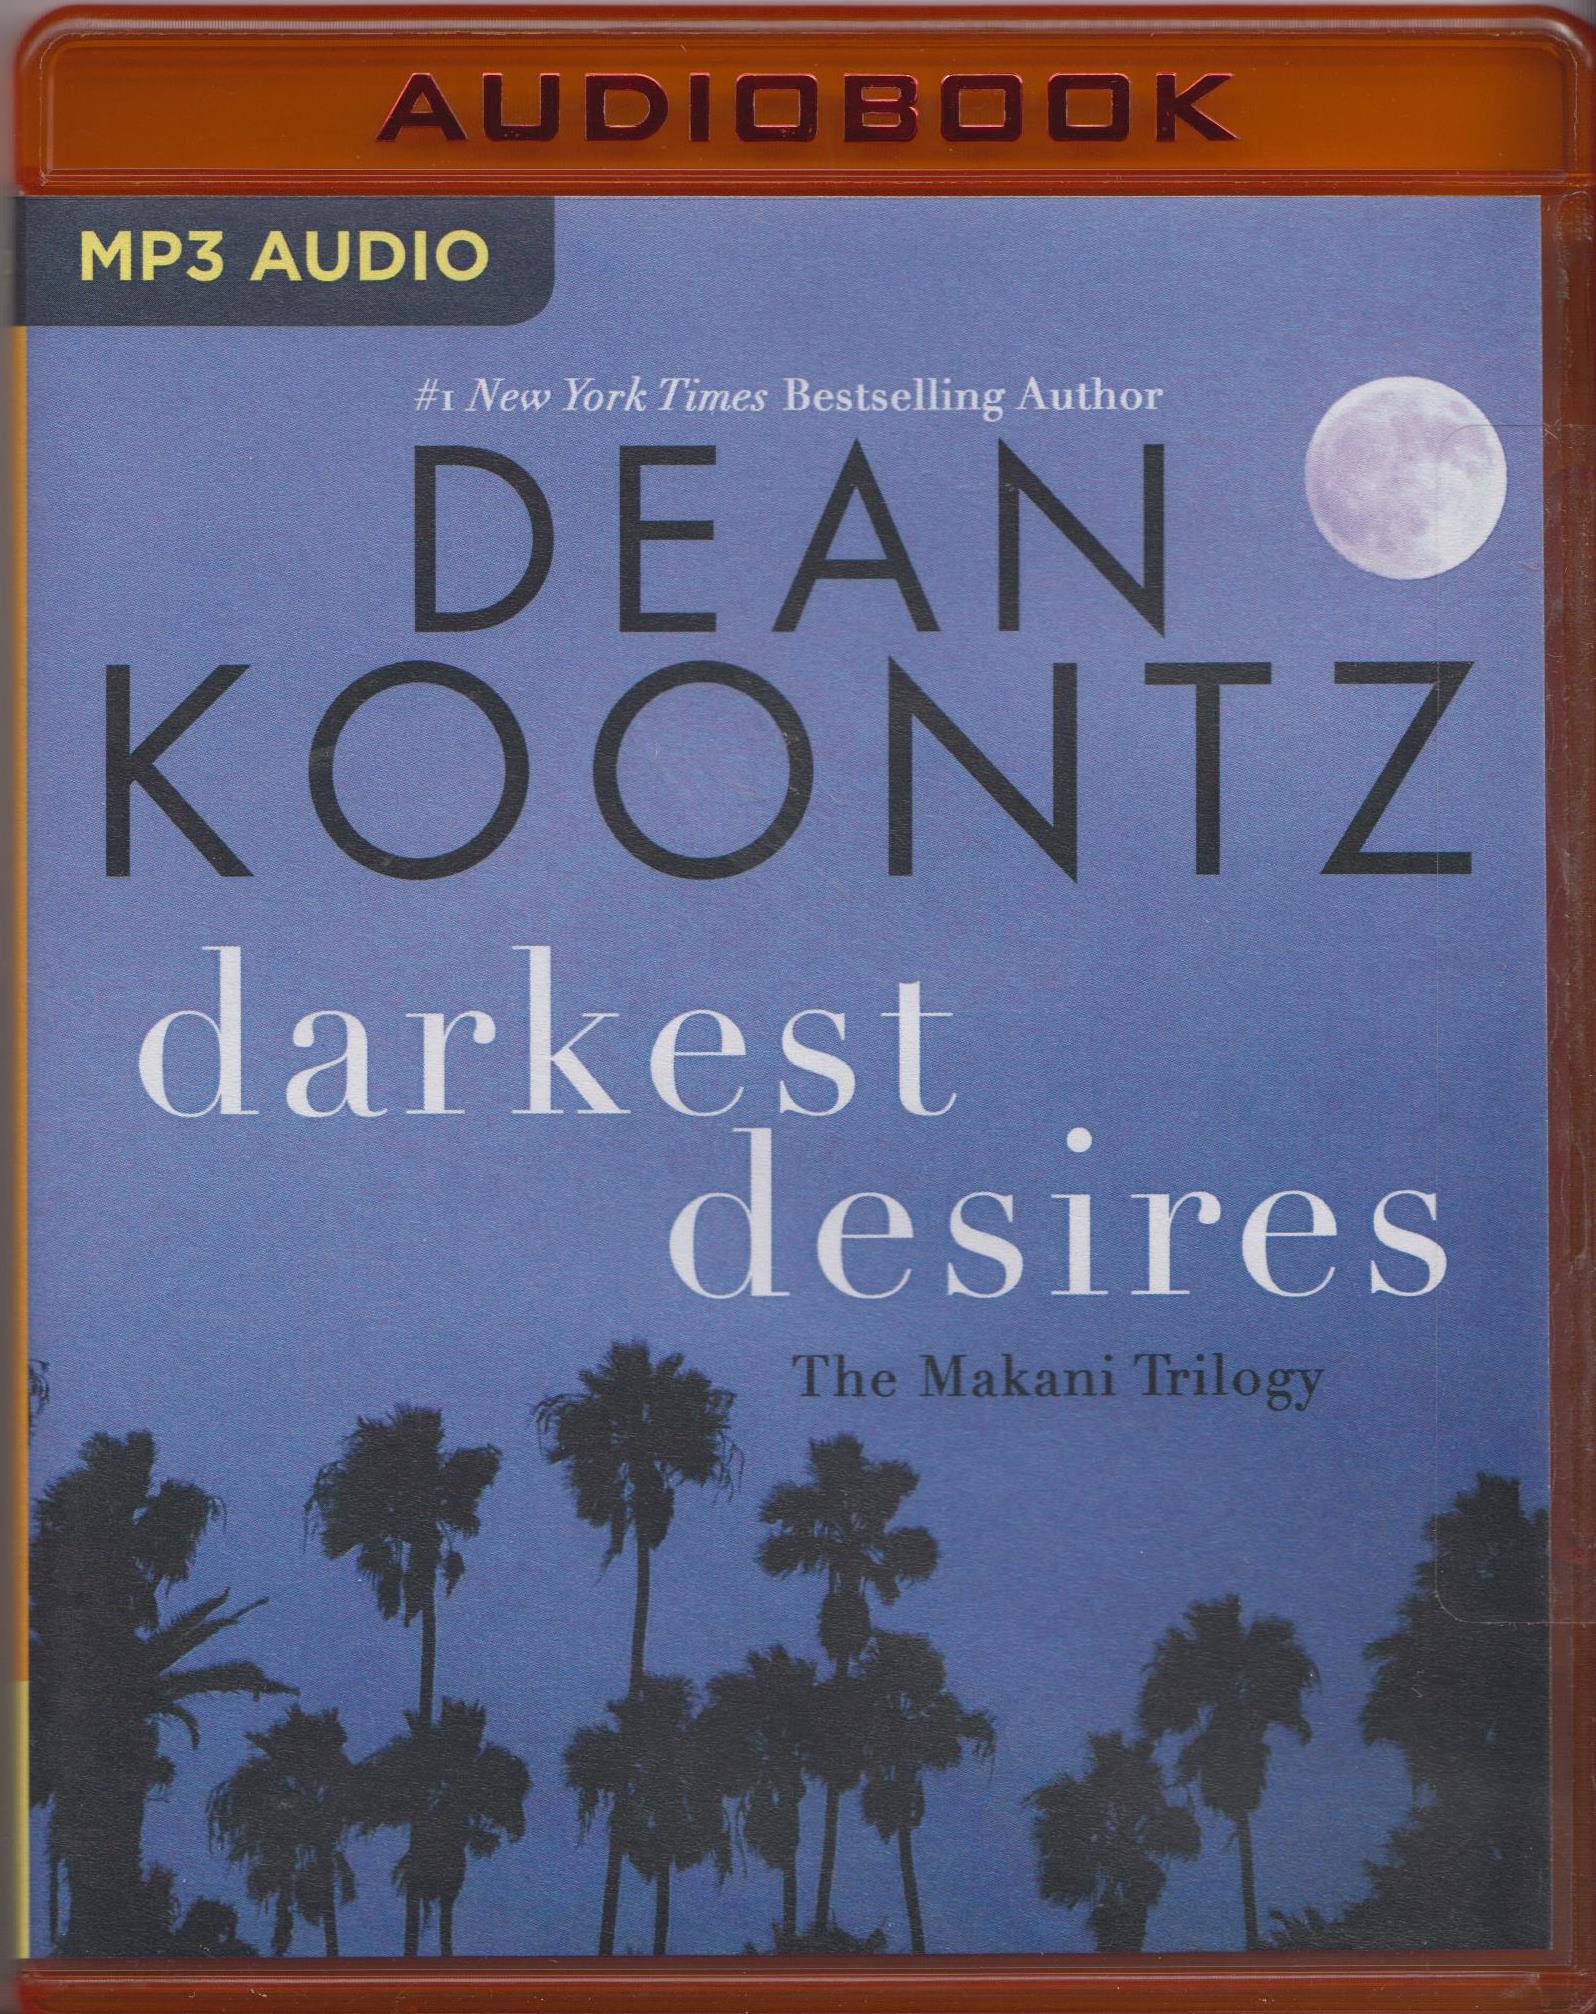 Friday Reads: Darkest Desires: The Makani Trilogy by Dean Koontz